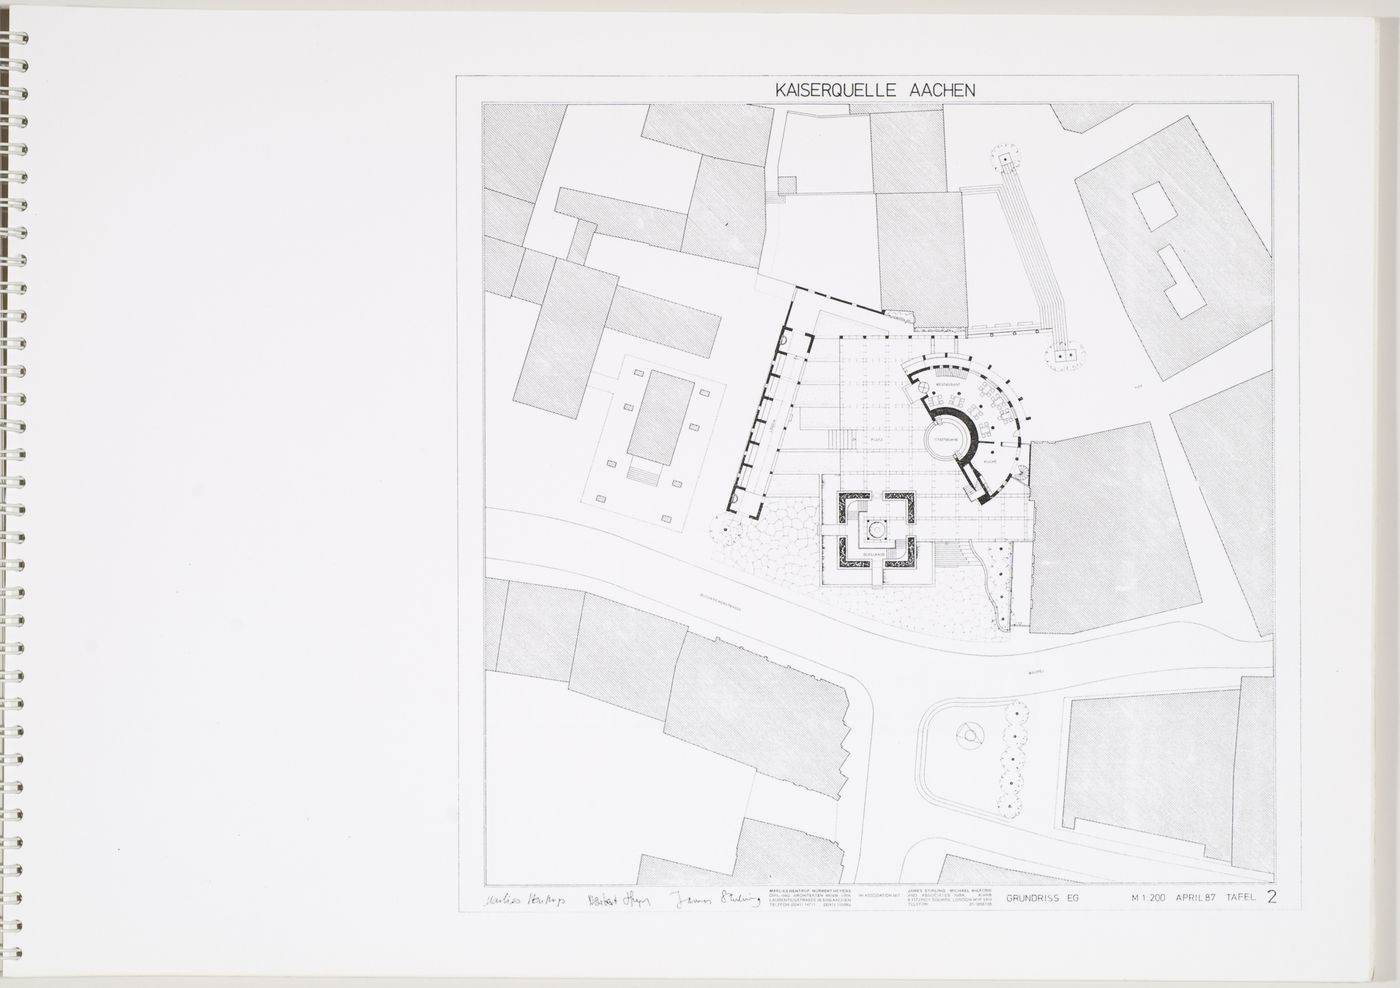 Kaiserplatz, Aachen, Germany: site plan